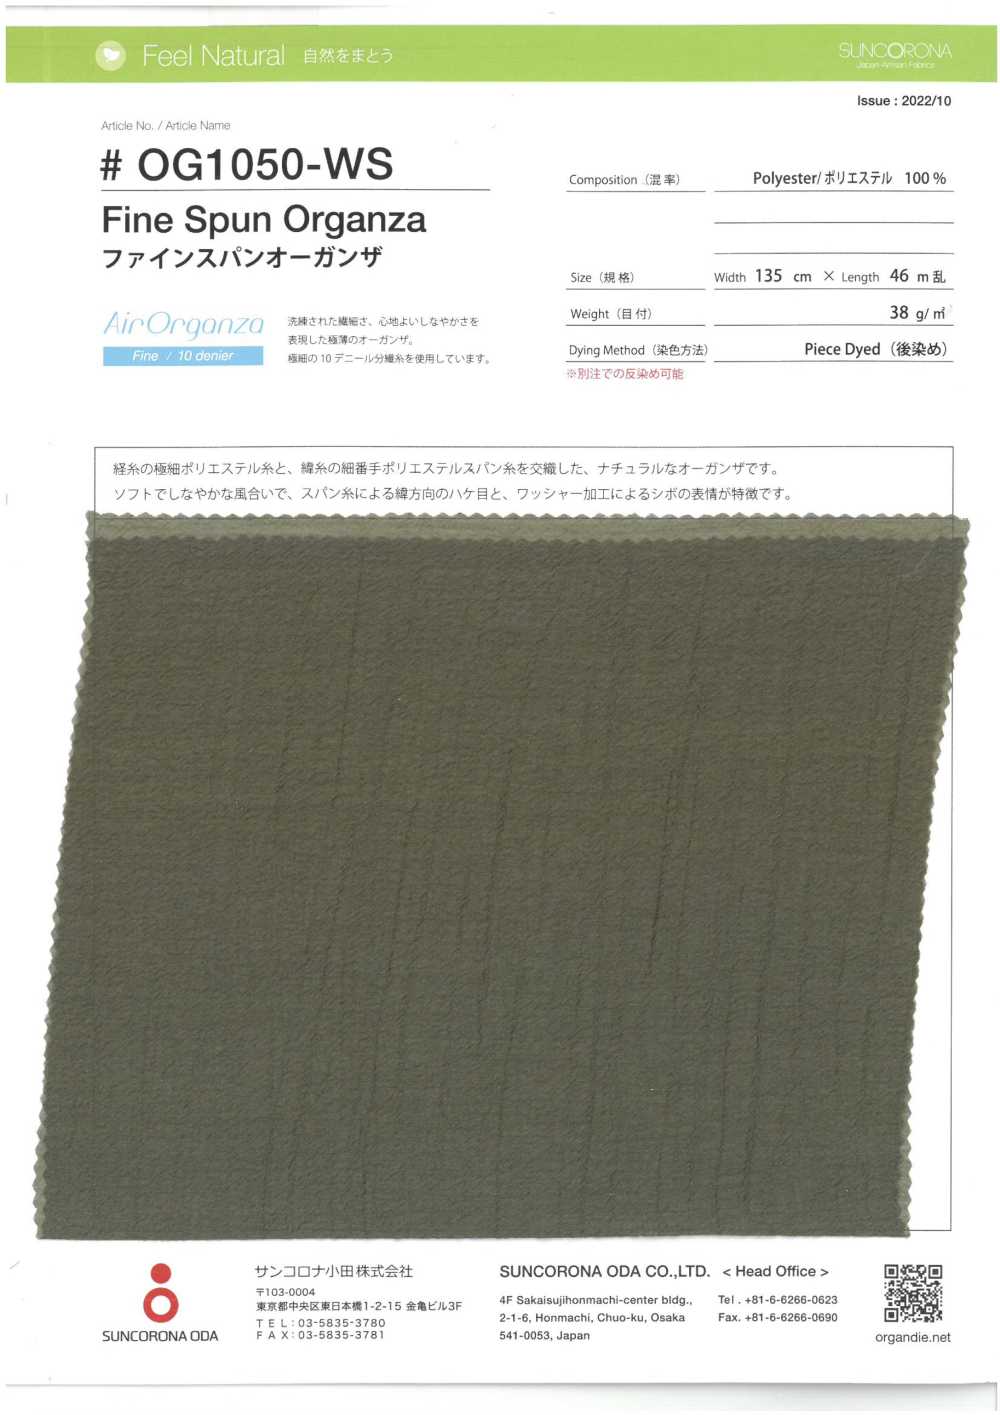 OG1050-WS Fein Gesponnener Organza[Textilgewebe] Suncorona Oda